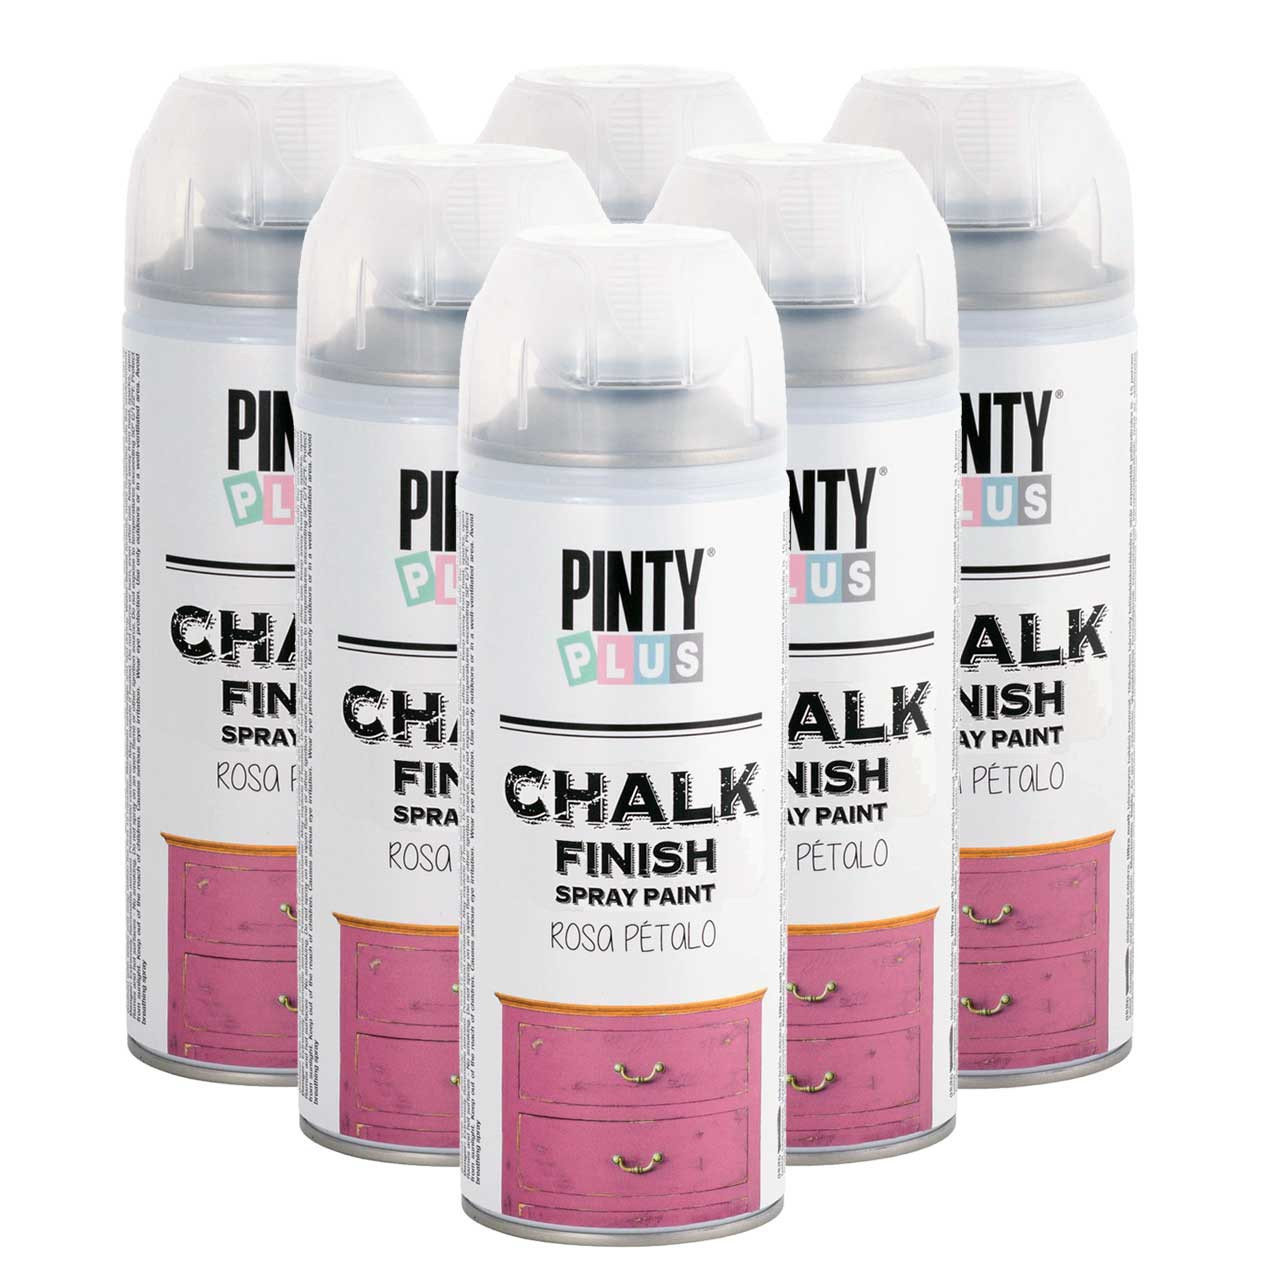 Pinty Plus - Art - Repositionable Adhesive Spray